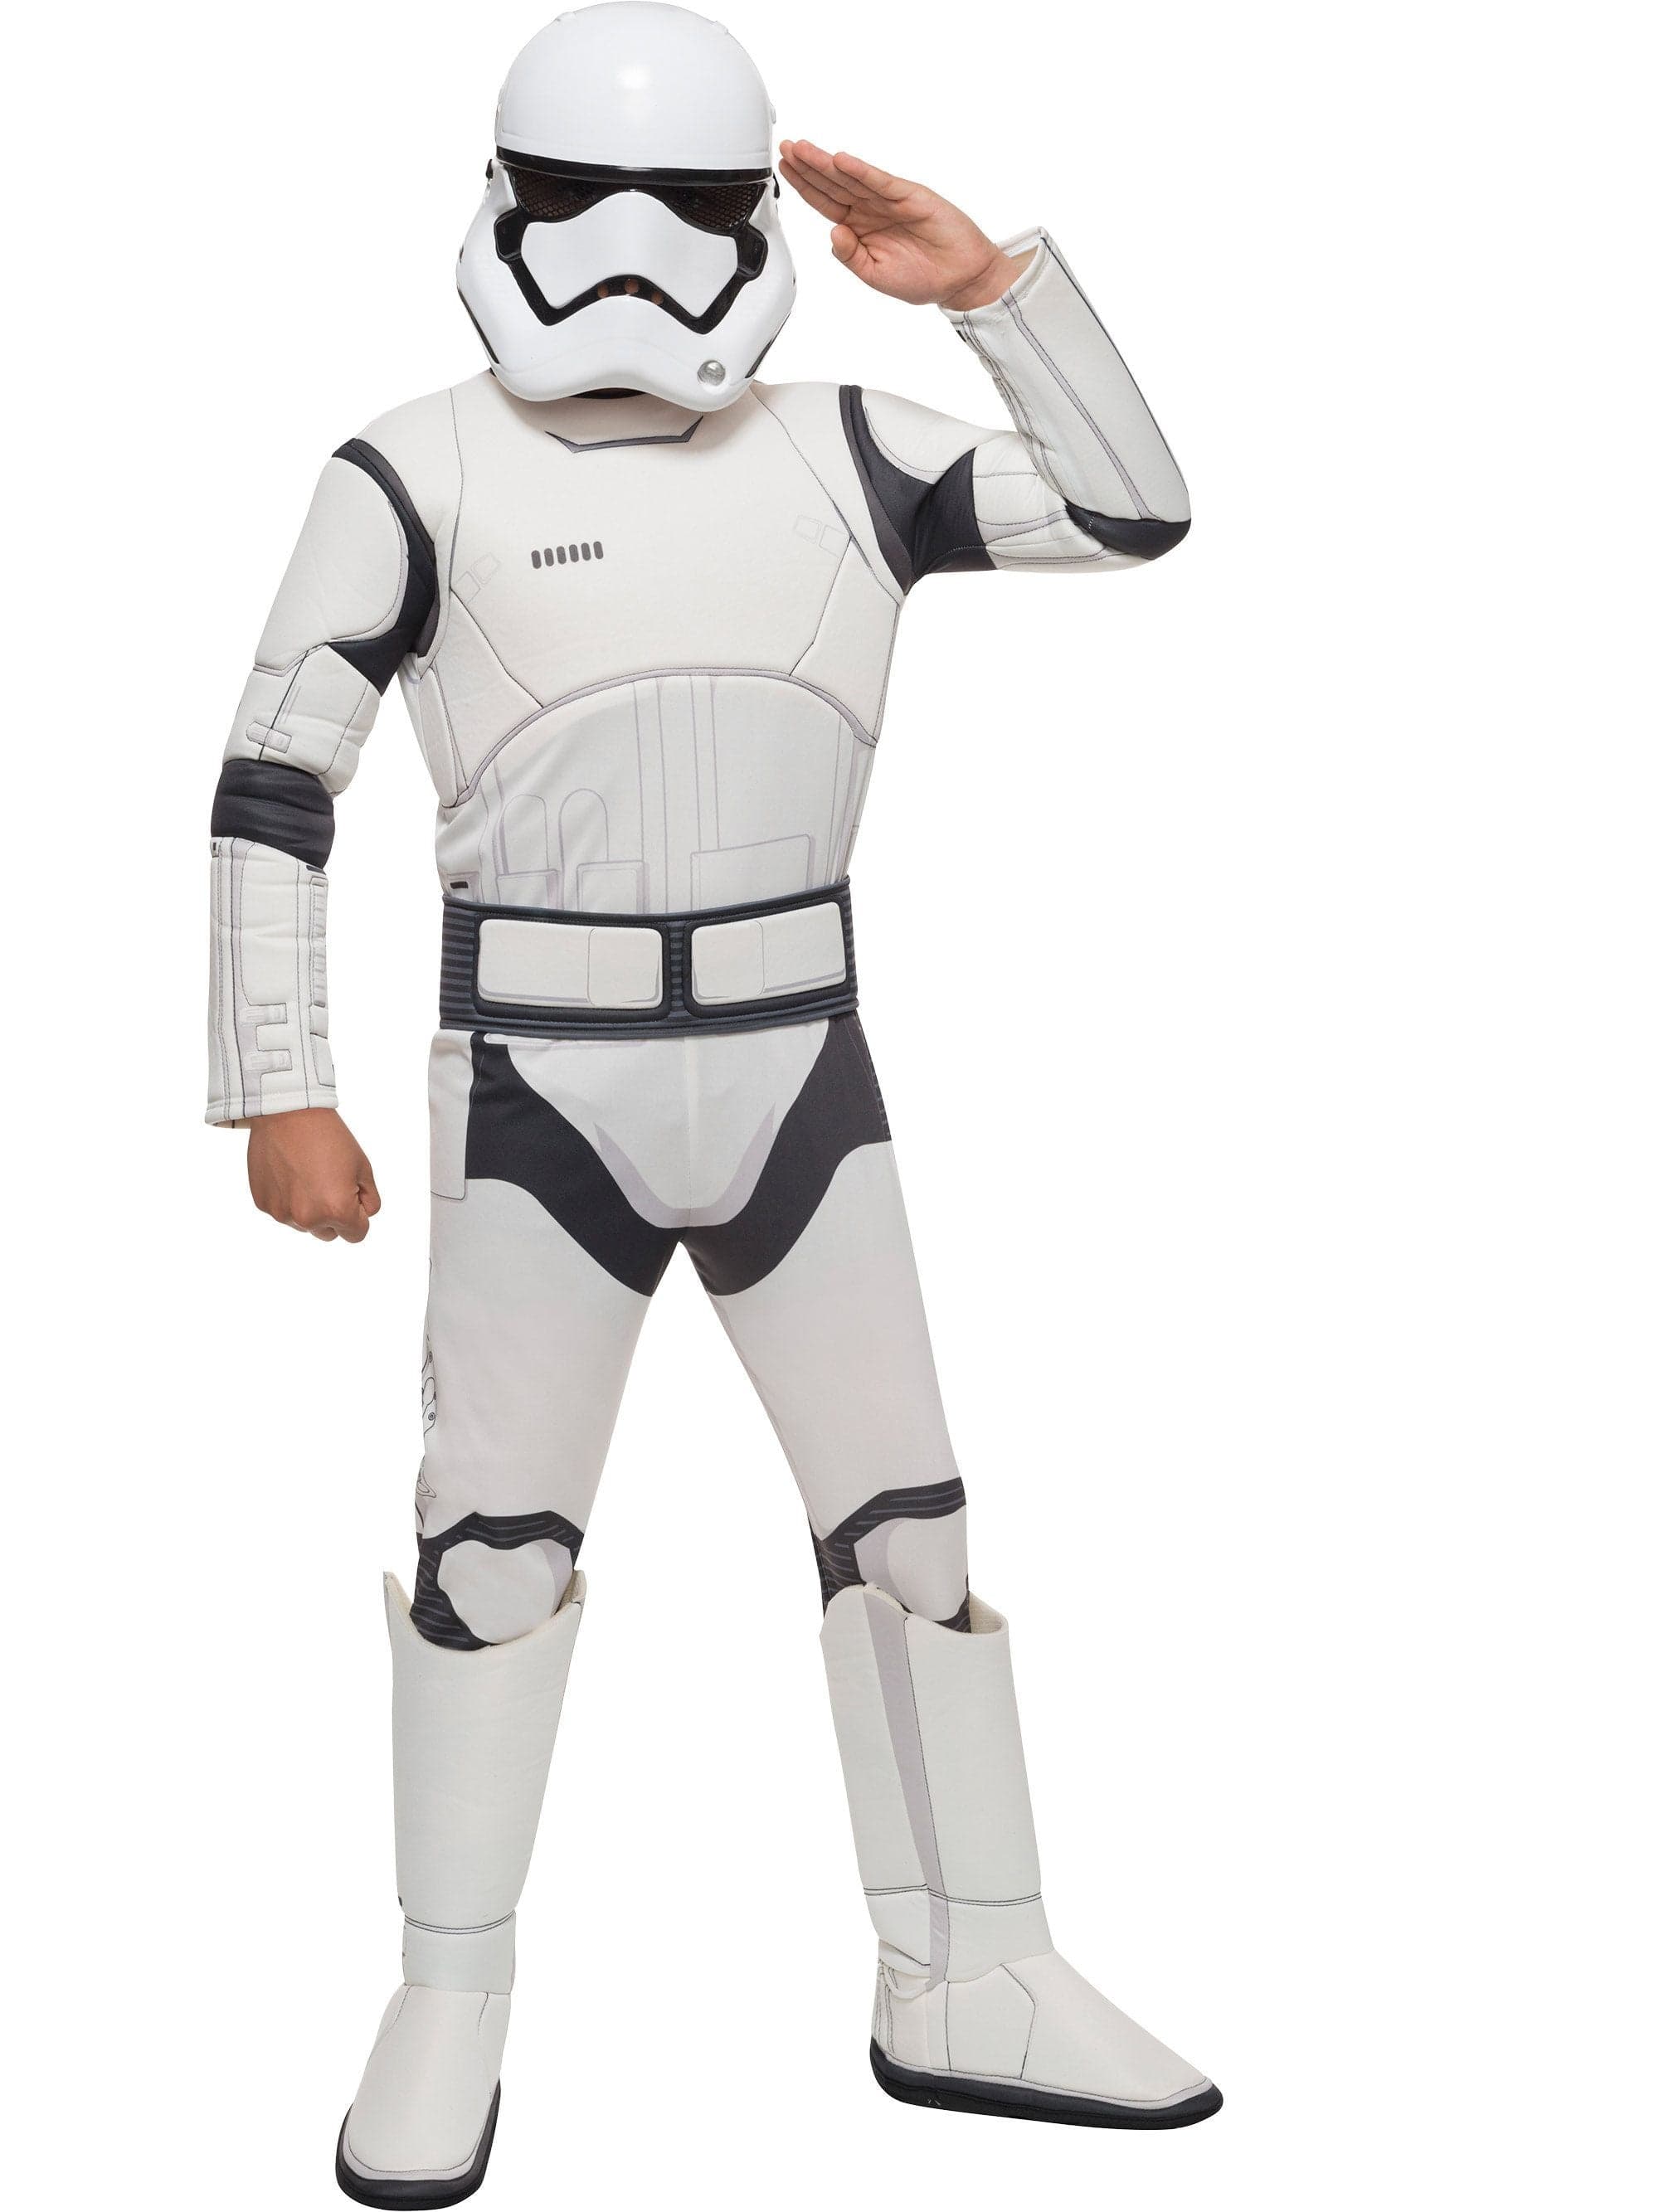 Kids The Force Awakens Stormtrooper Deluxe Costume - costumes.com